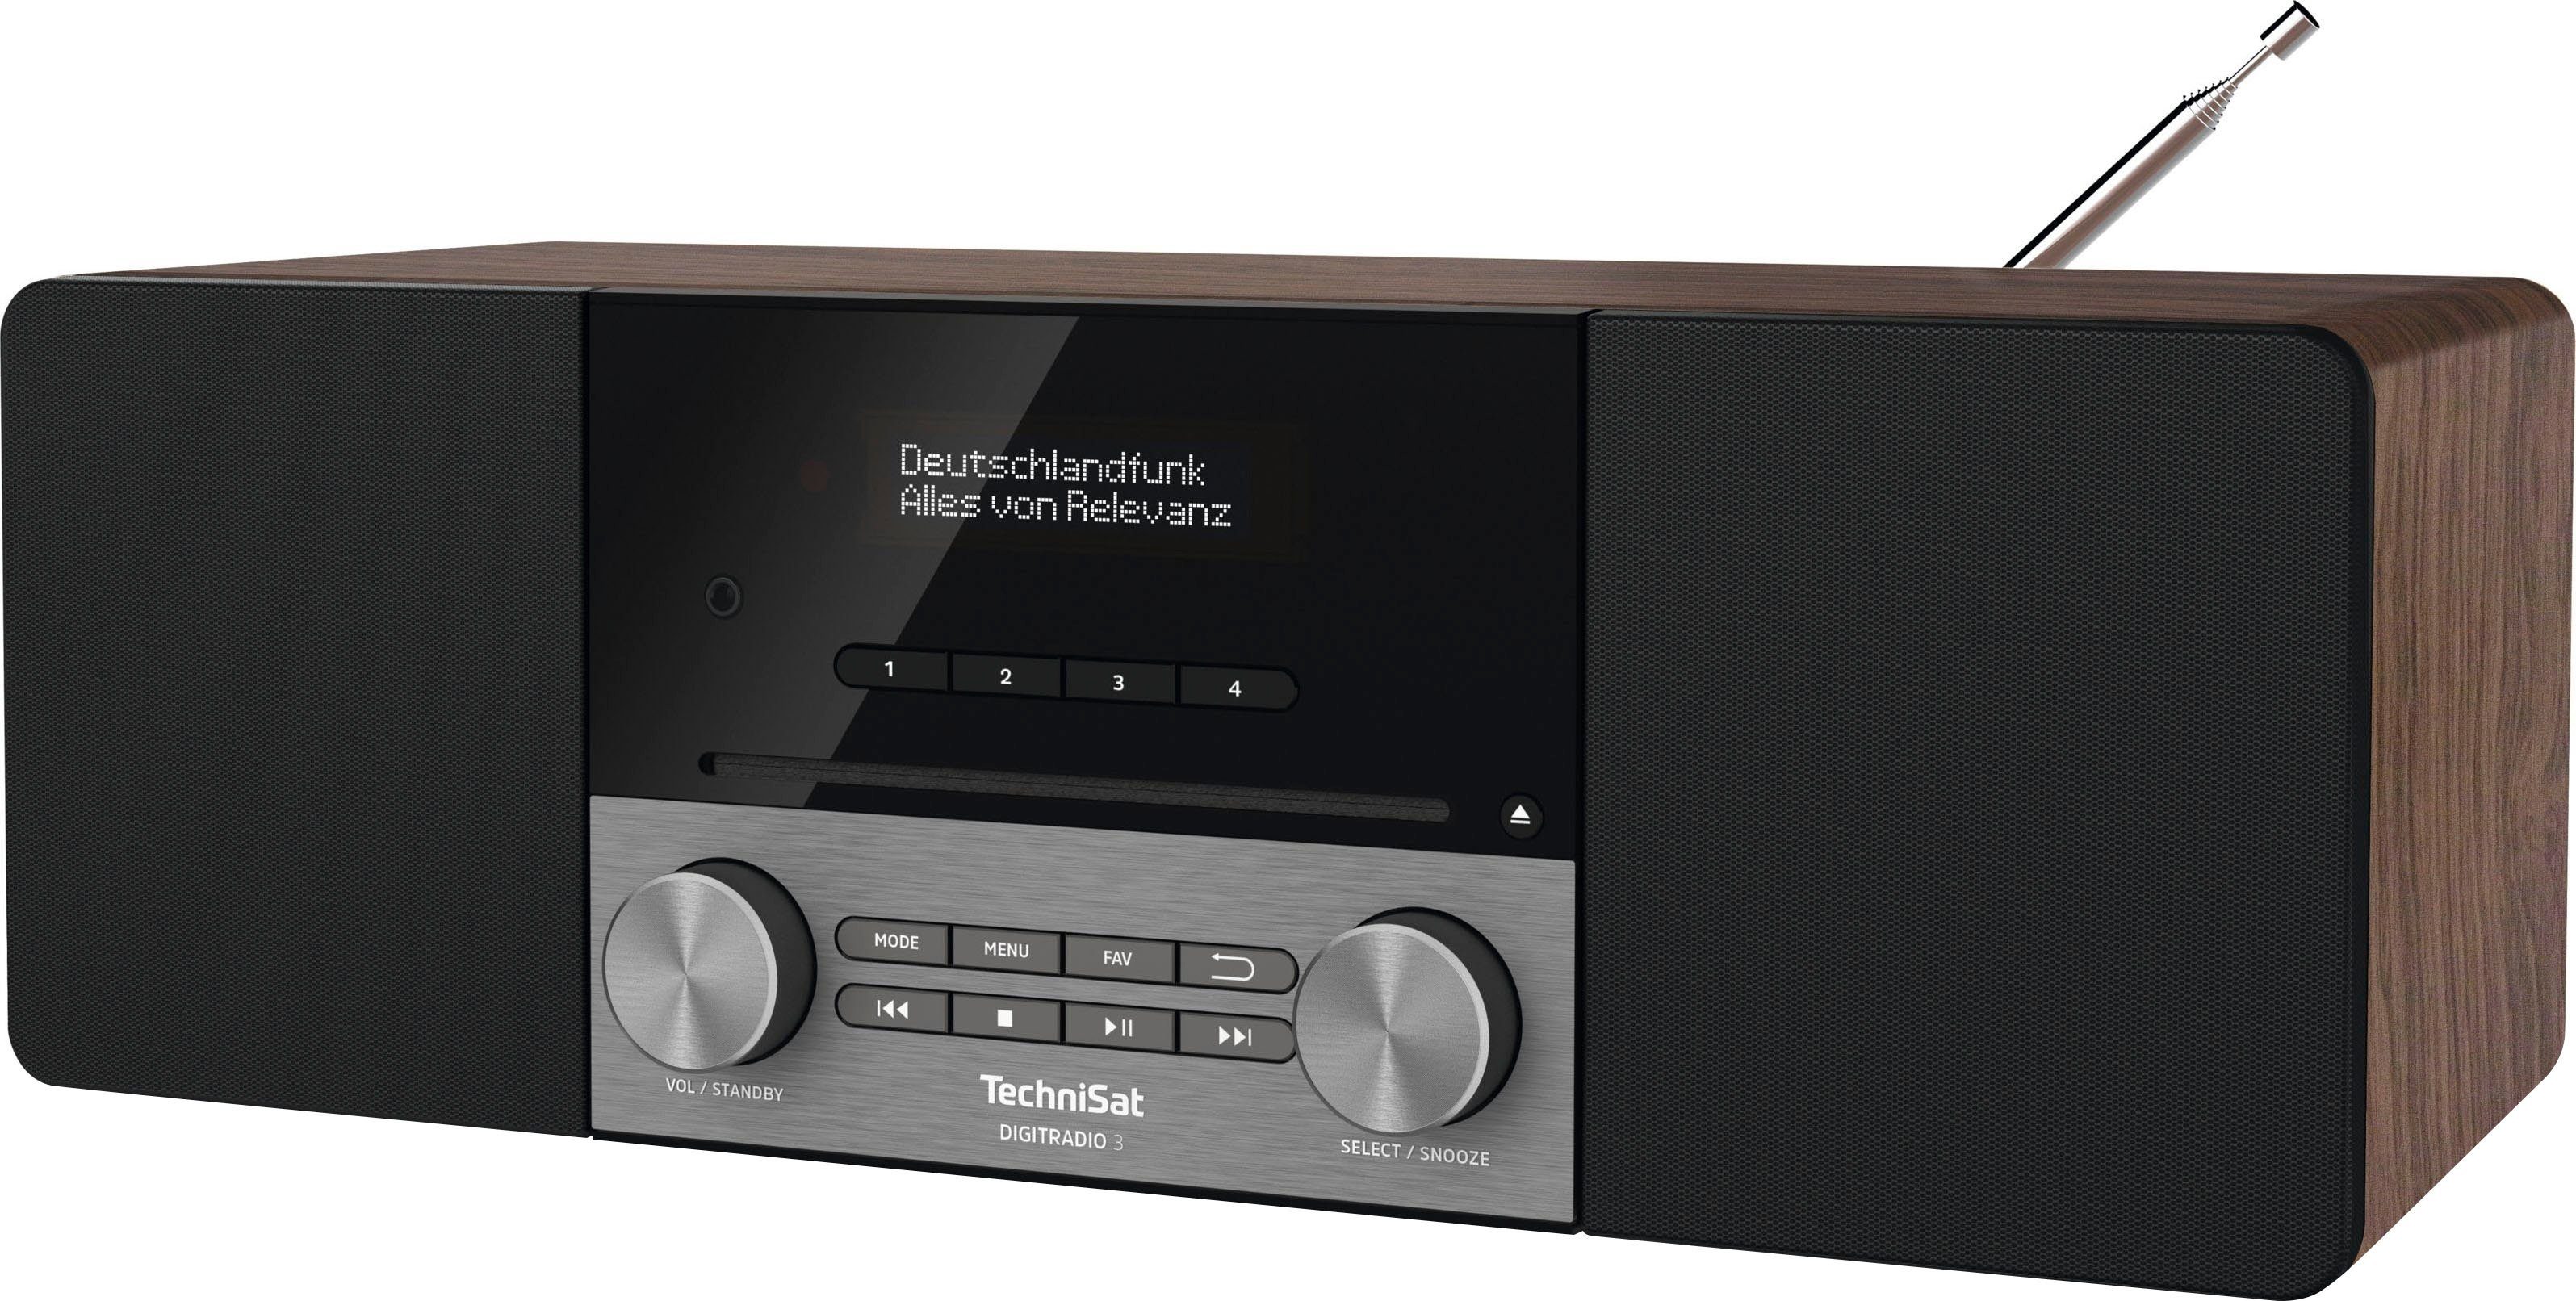 TechniSat DIGITRADIO 3 (DAB) Made Nussbaum Germany) CD-Player, (Digitalradio Digitalradio 20 in UKW RDS, (DAB), W, mit